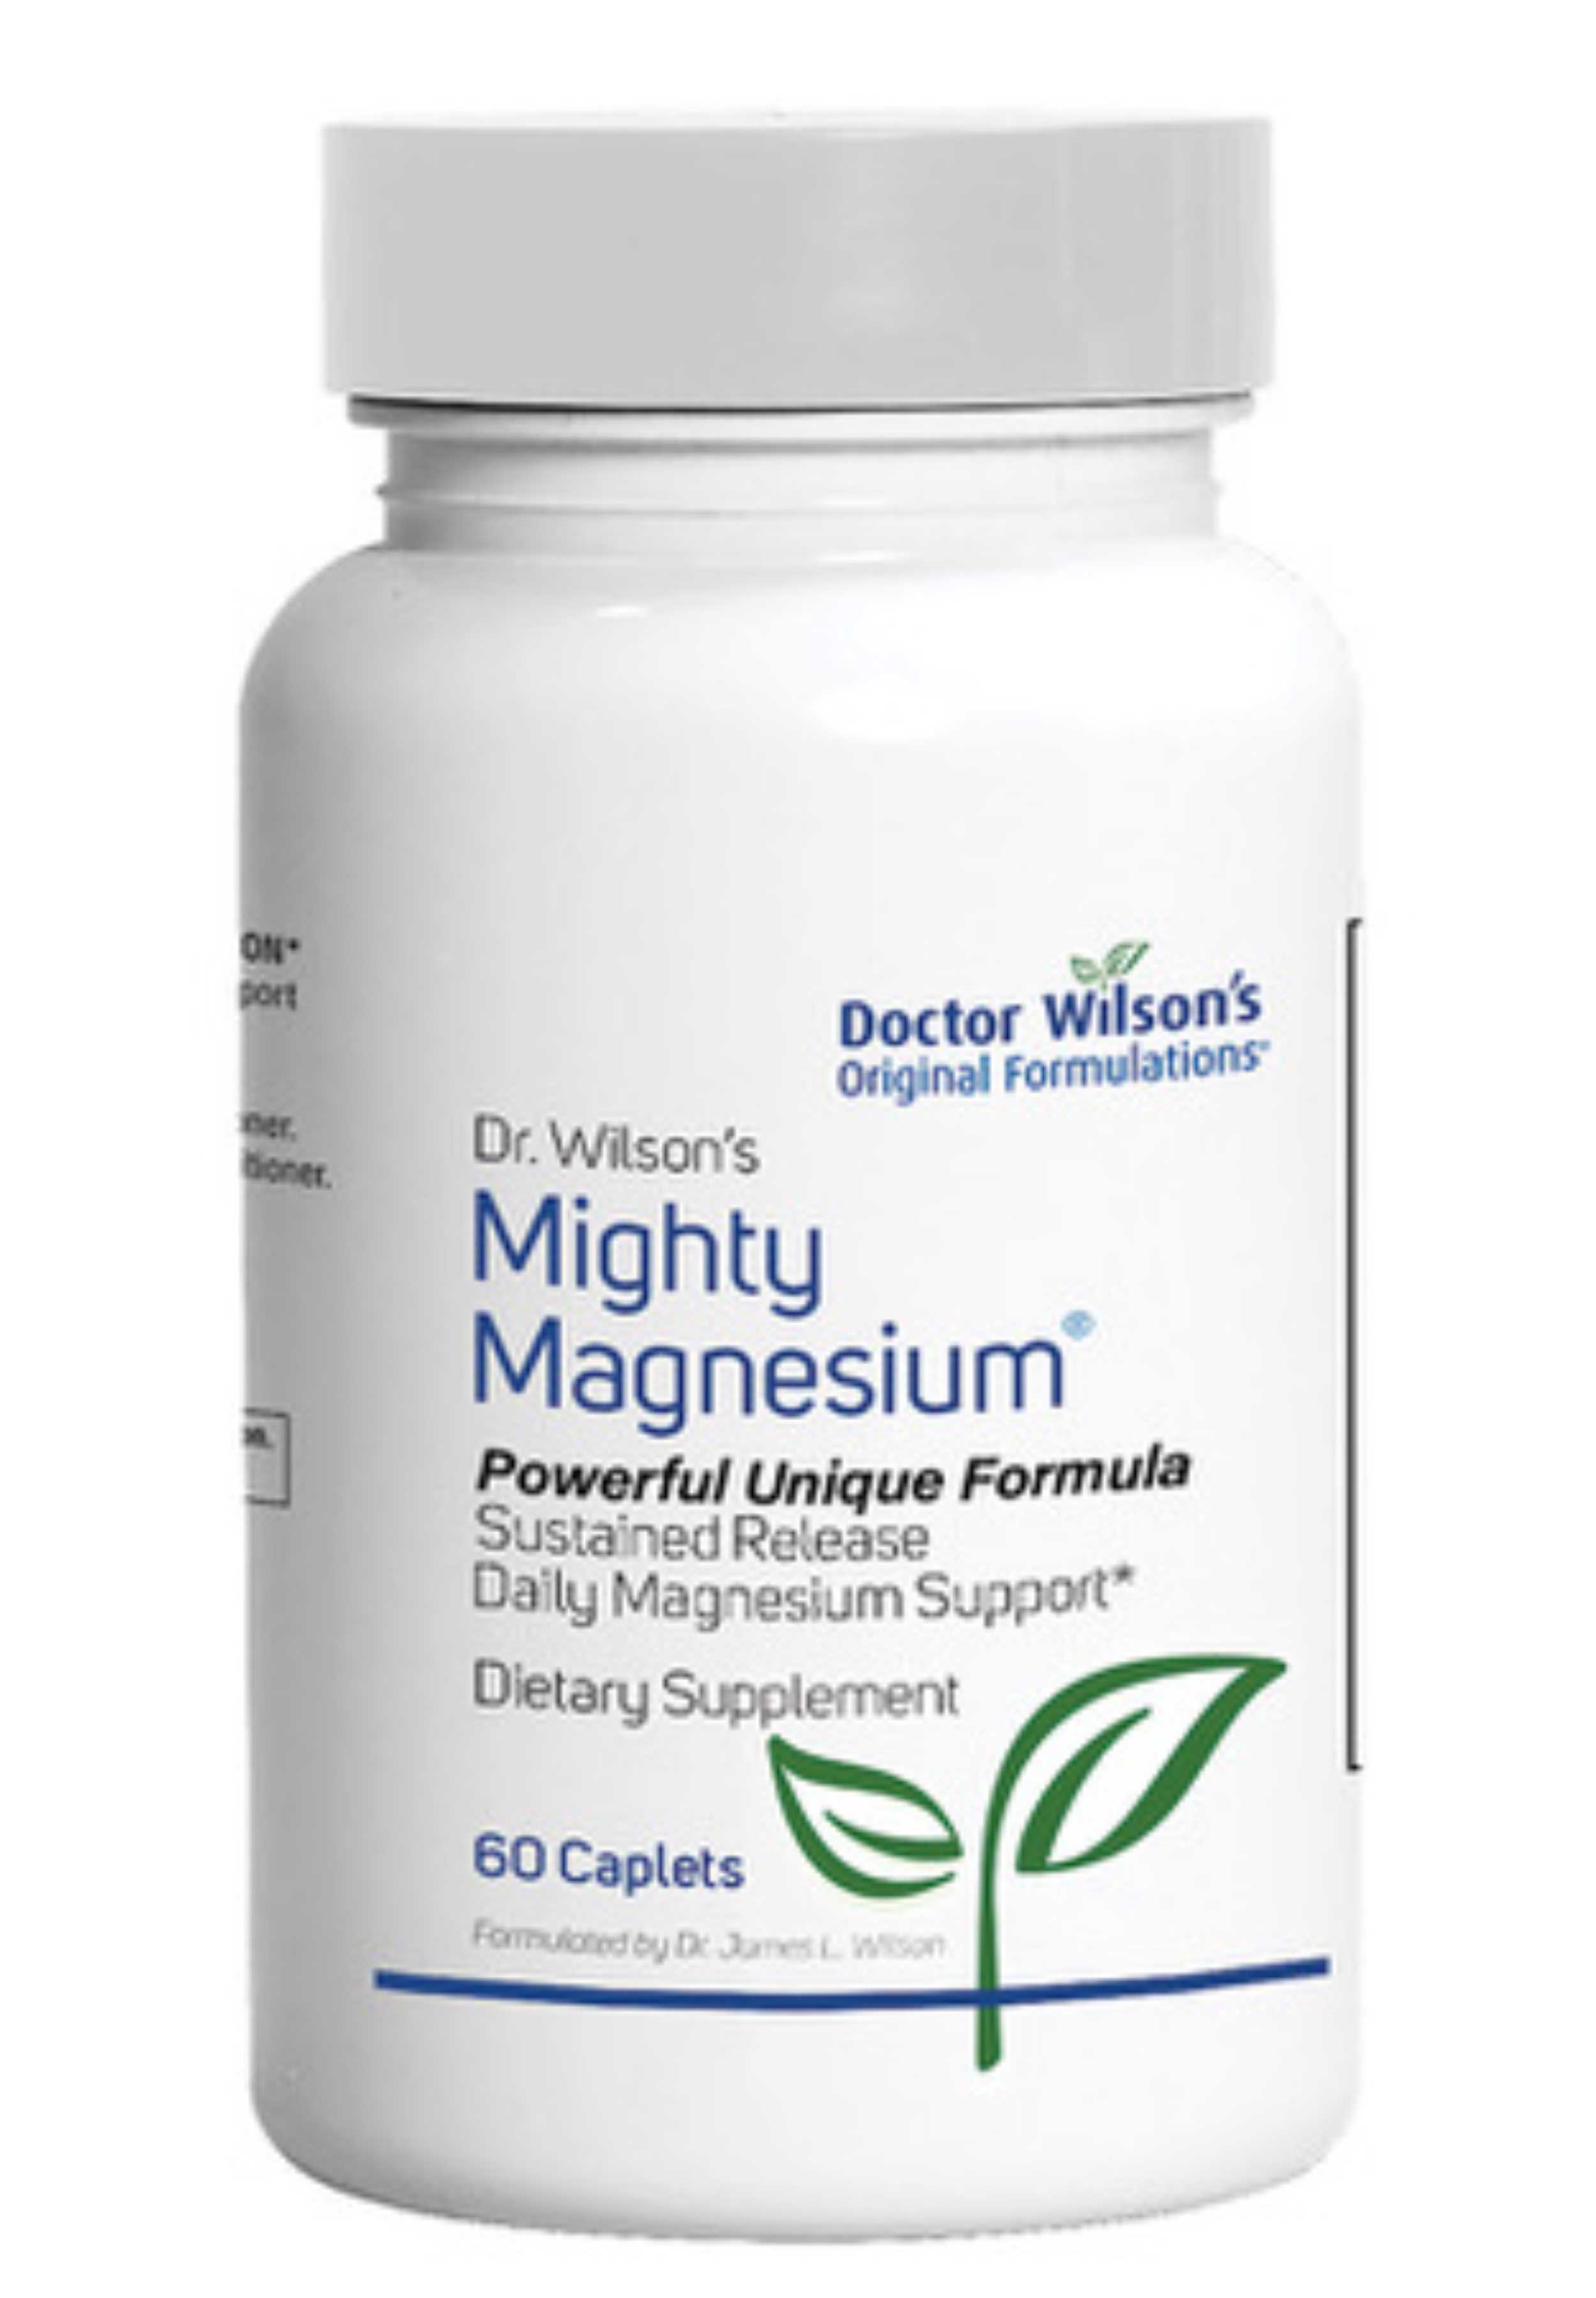 Doctor Wilson's Original Formulations Mighty Magnesium